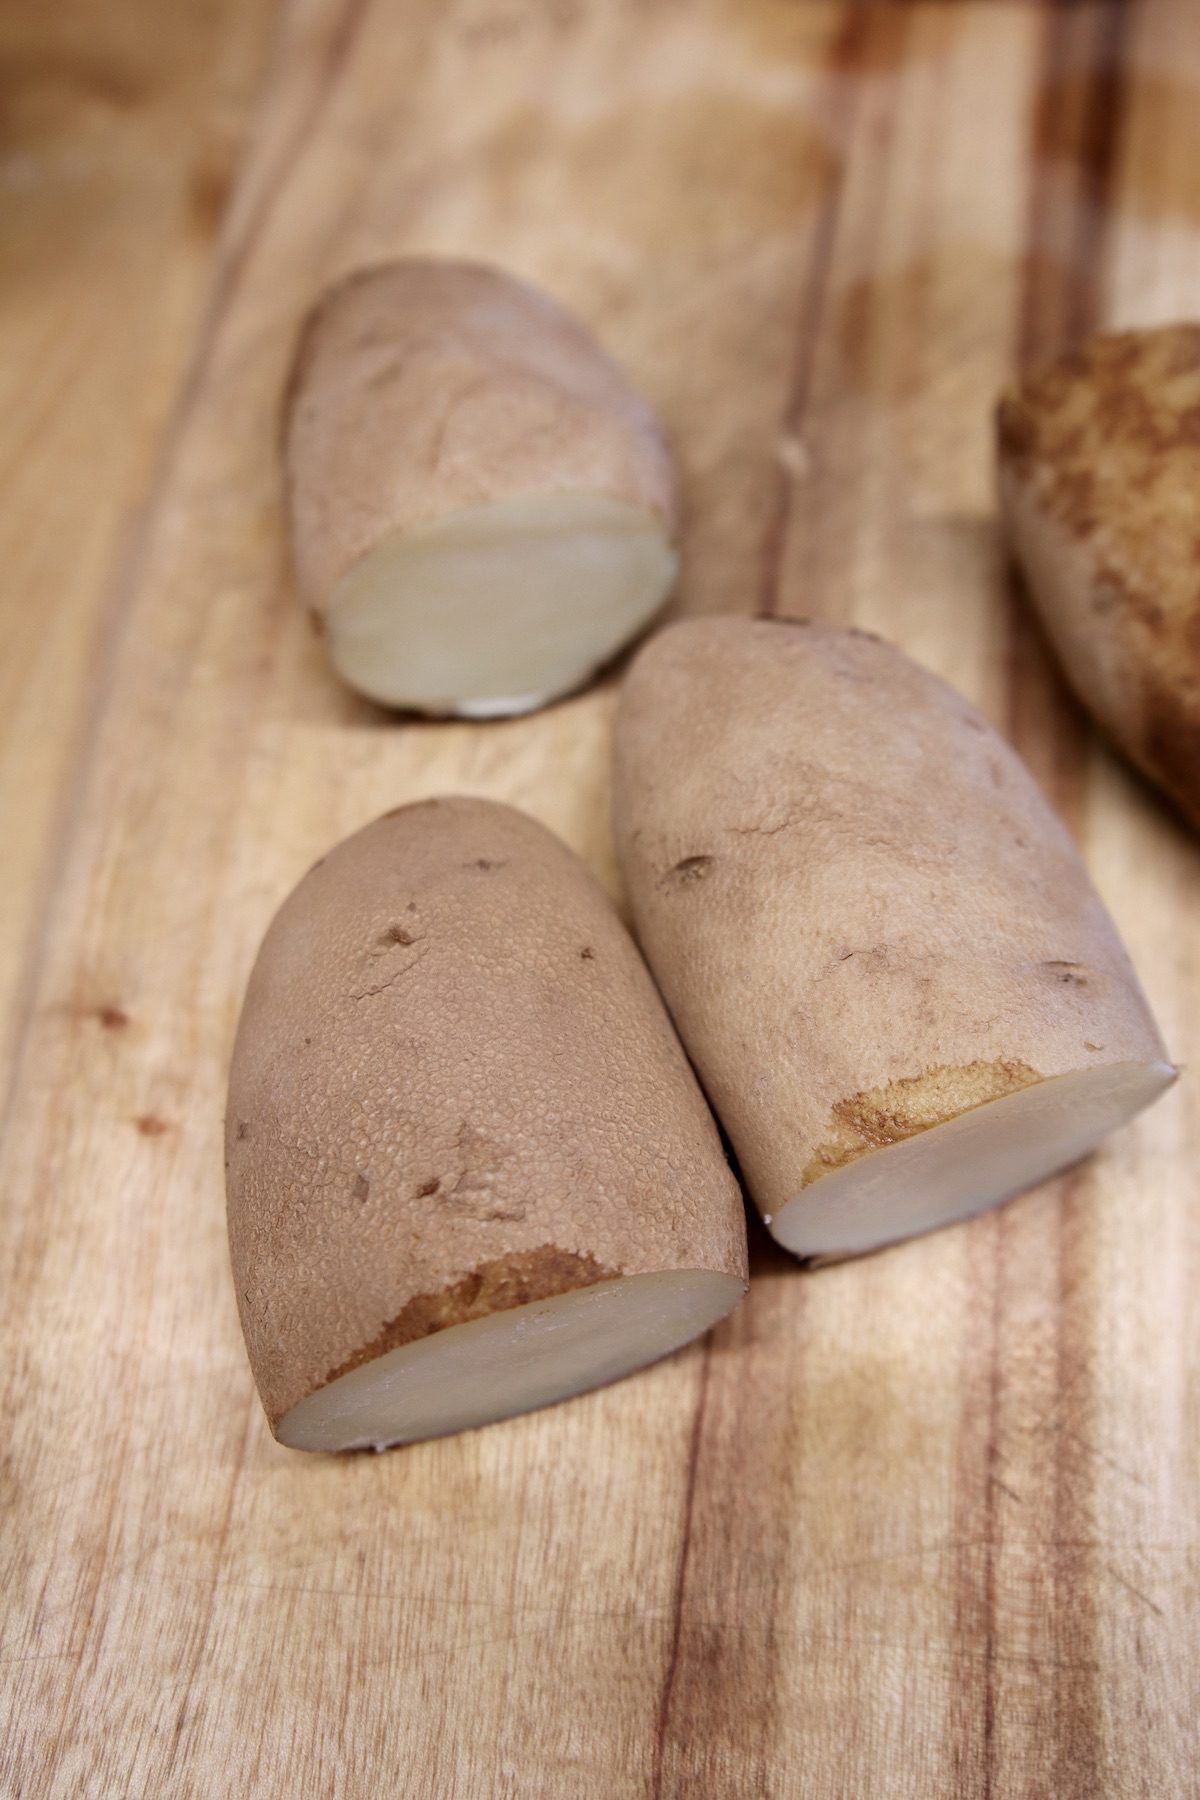 russet potatoes, ends cut off